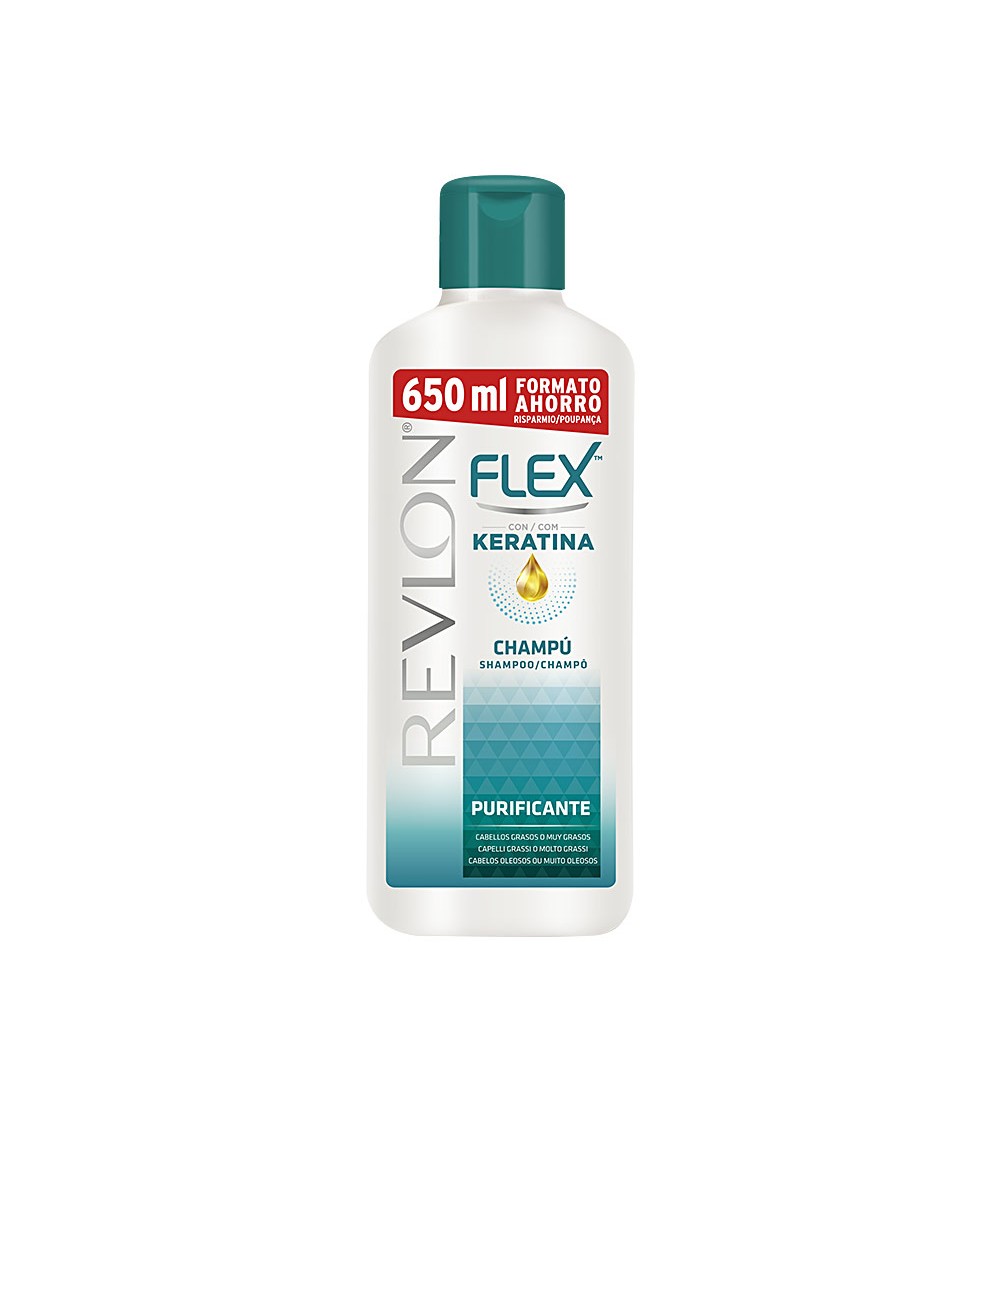 FLEX  Shampoing Kératine purifiant oily hair 650 ml